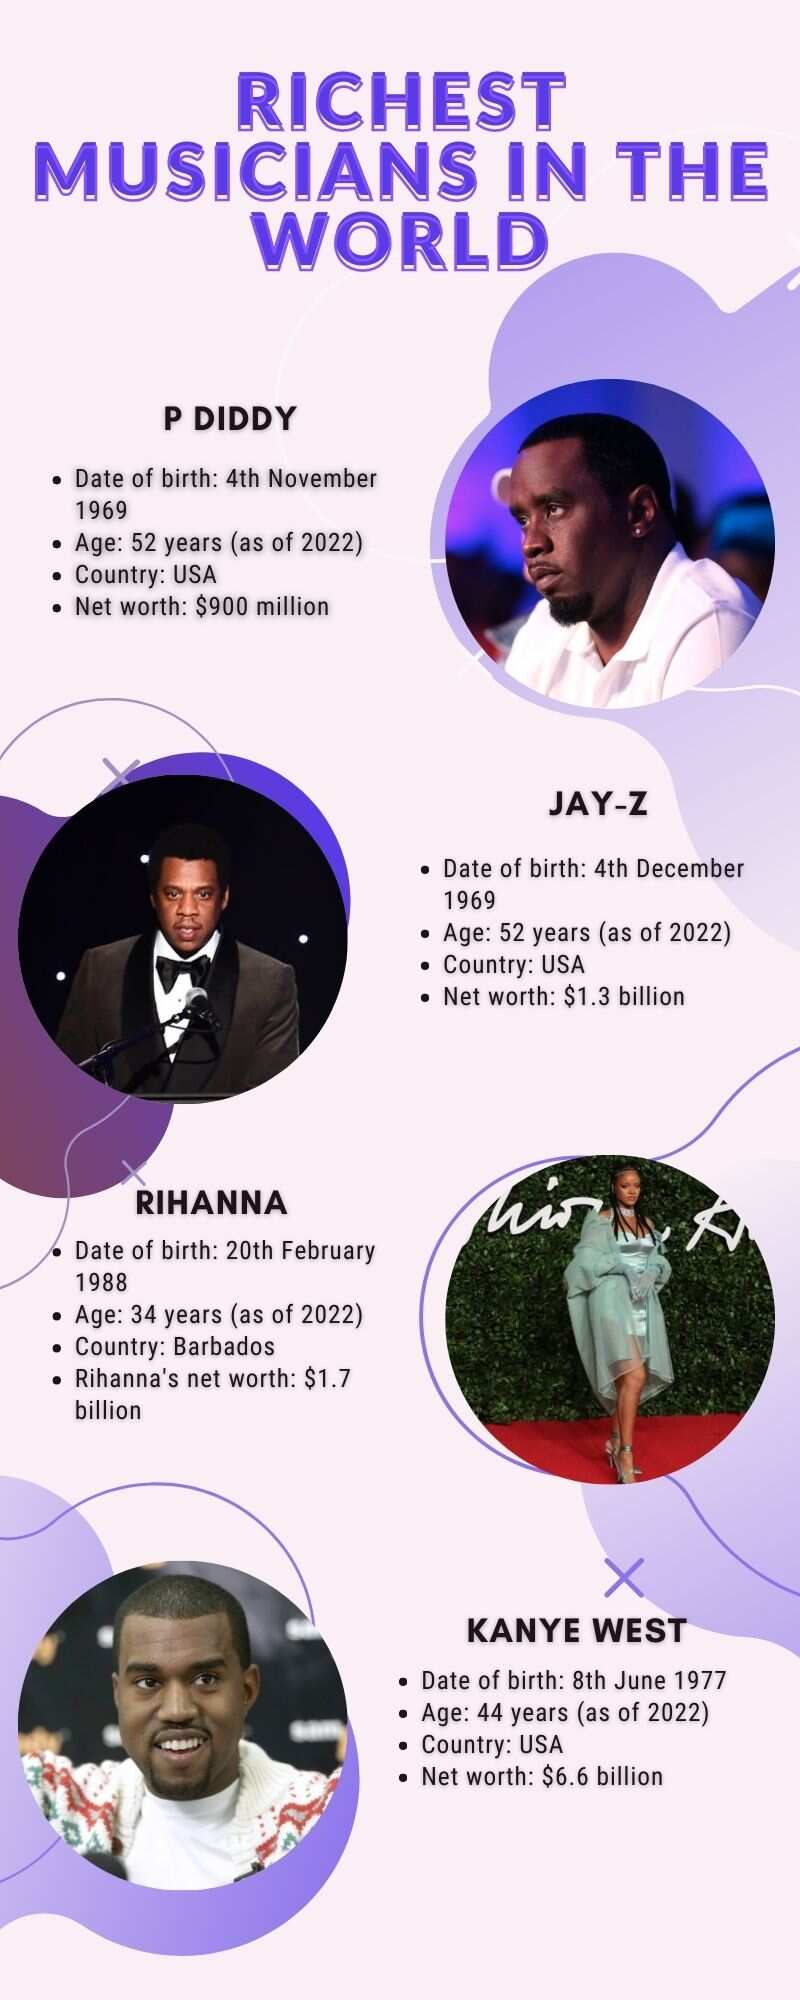 Richest musicians in the world